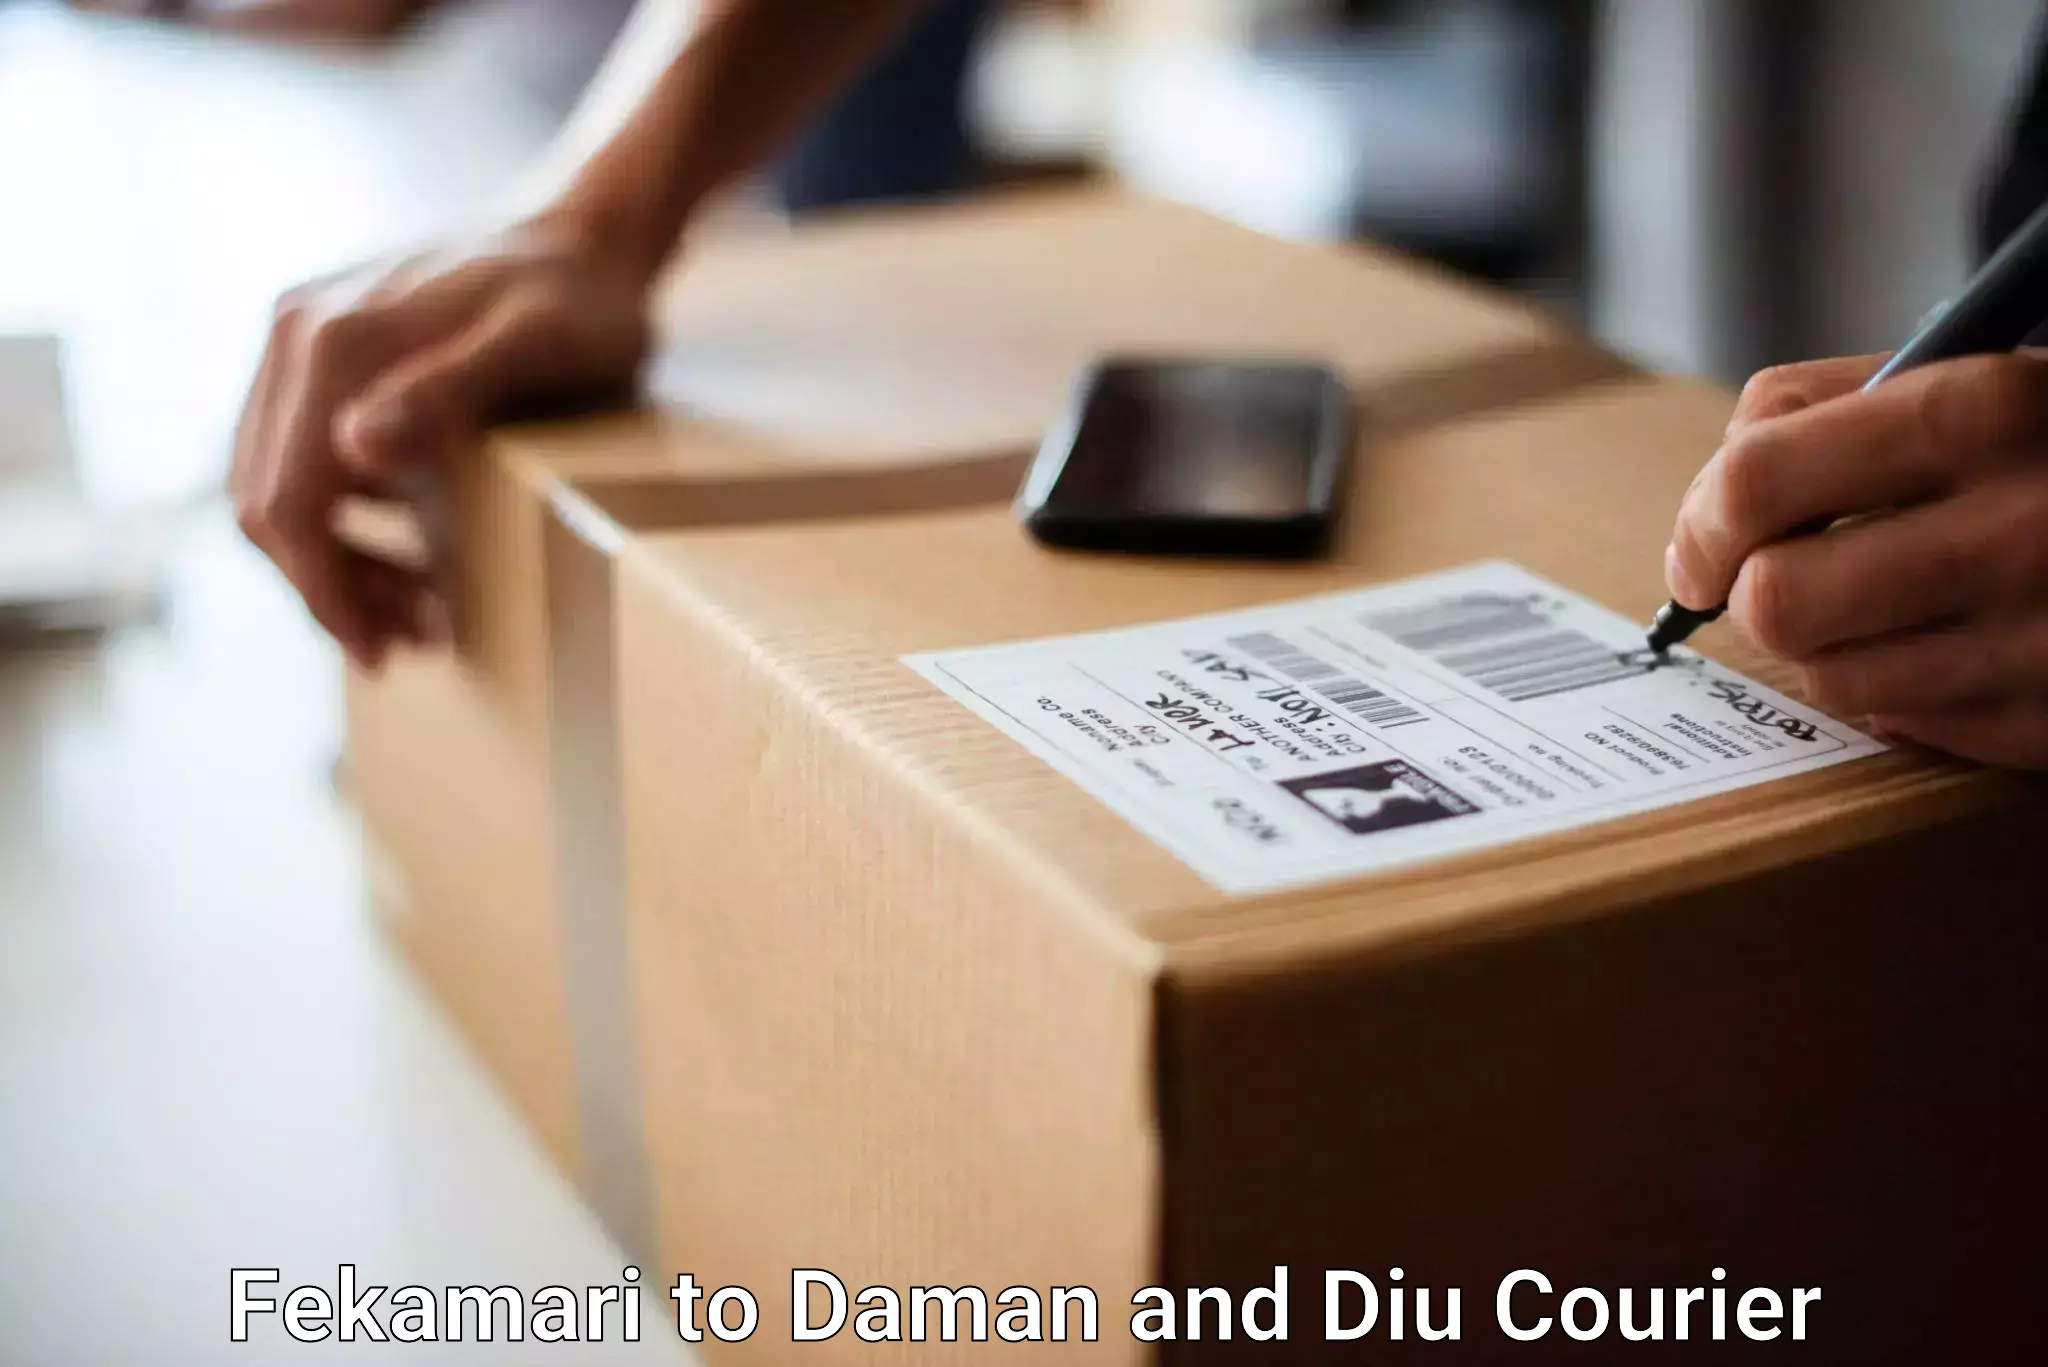 Luggage transport company Fekamari to Daman and Diu